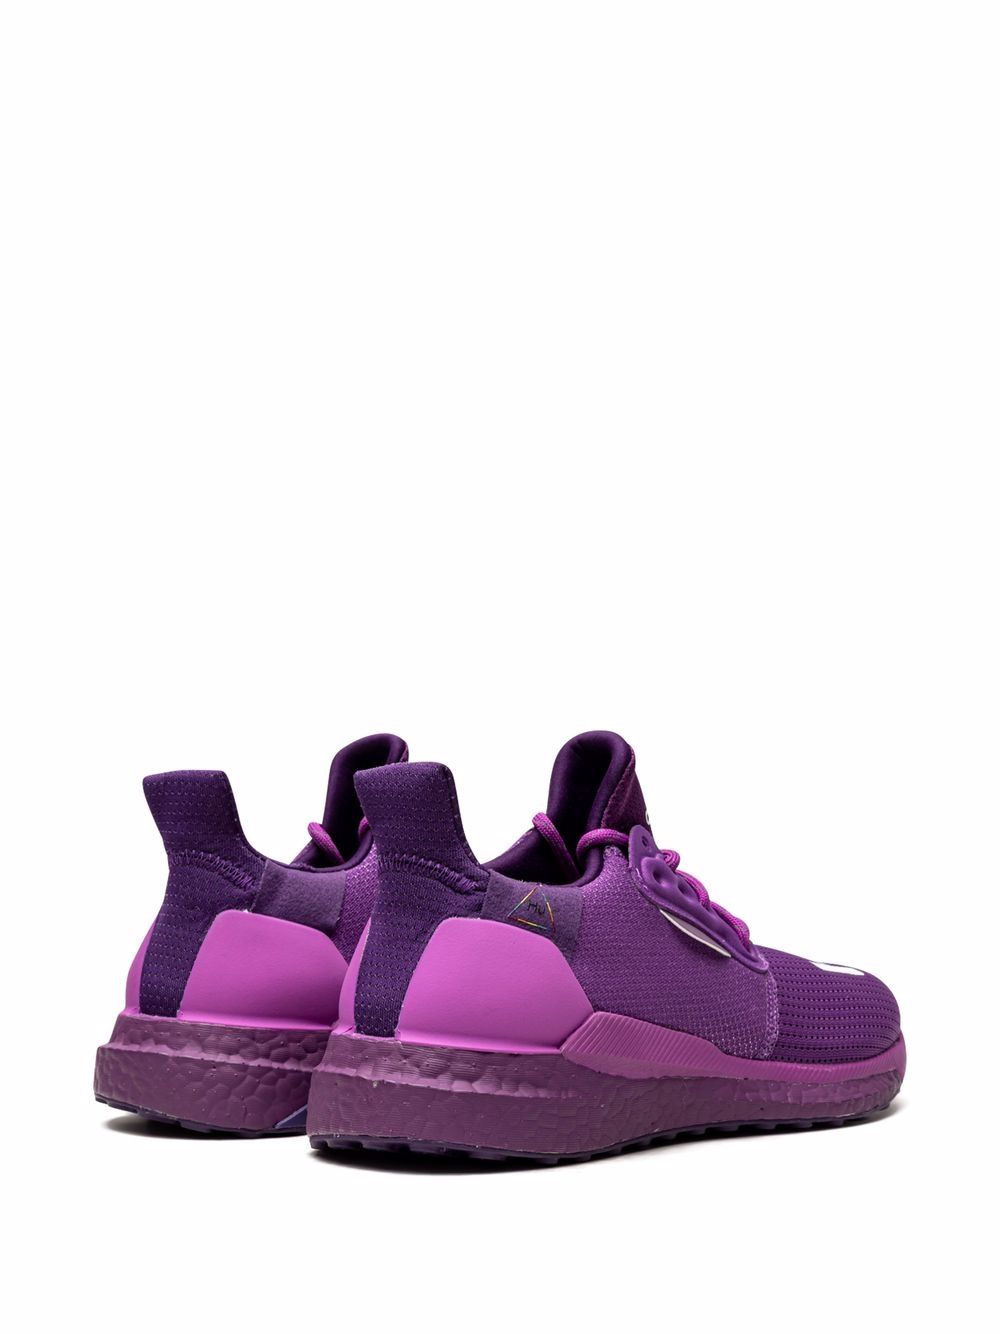 Do You Like The Pharrell Williams x adidas Solar Hu Glide Purple